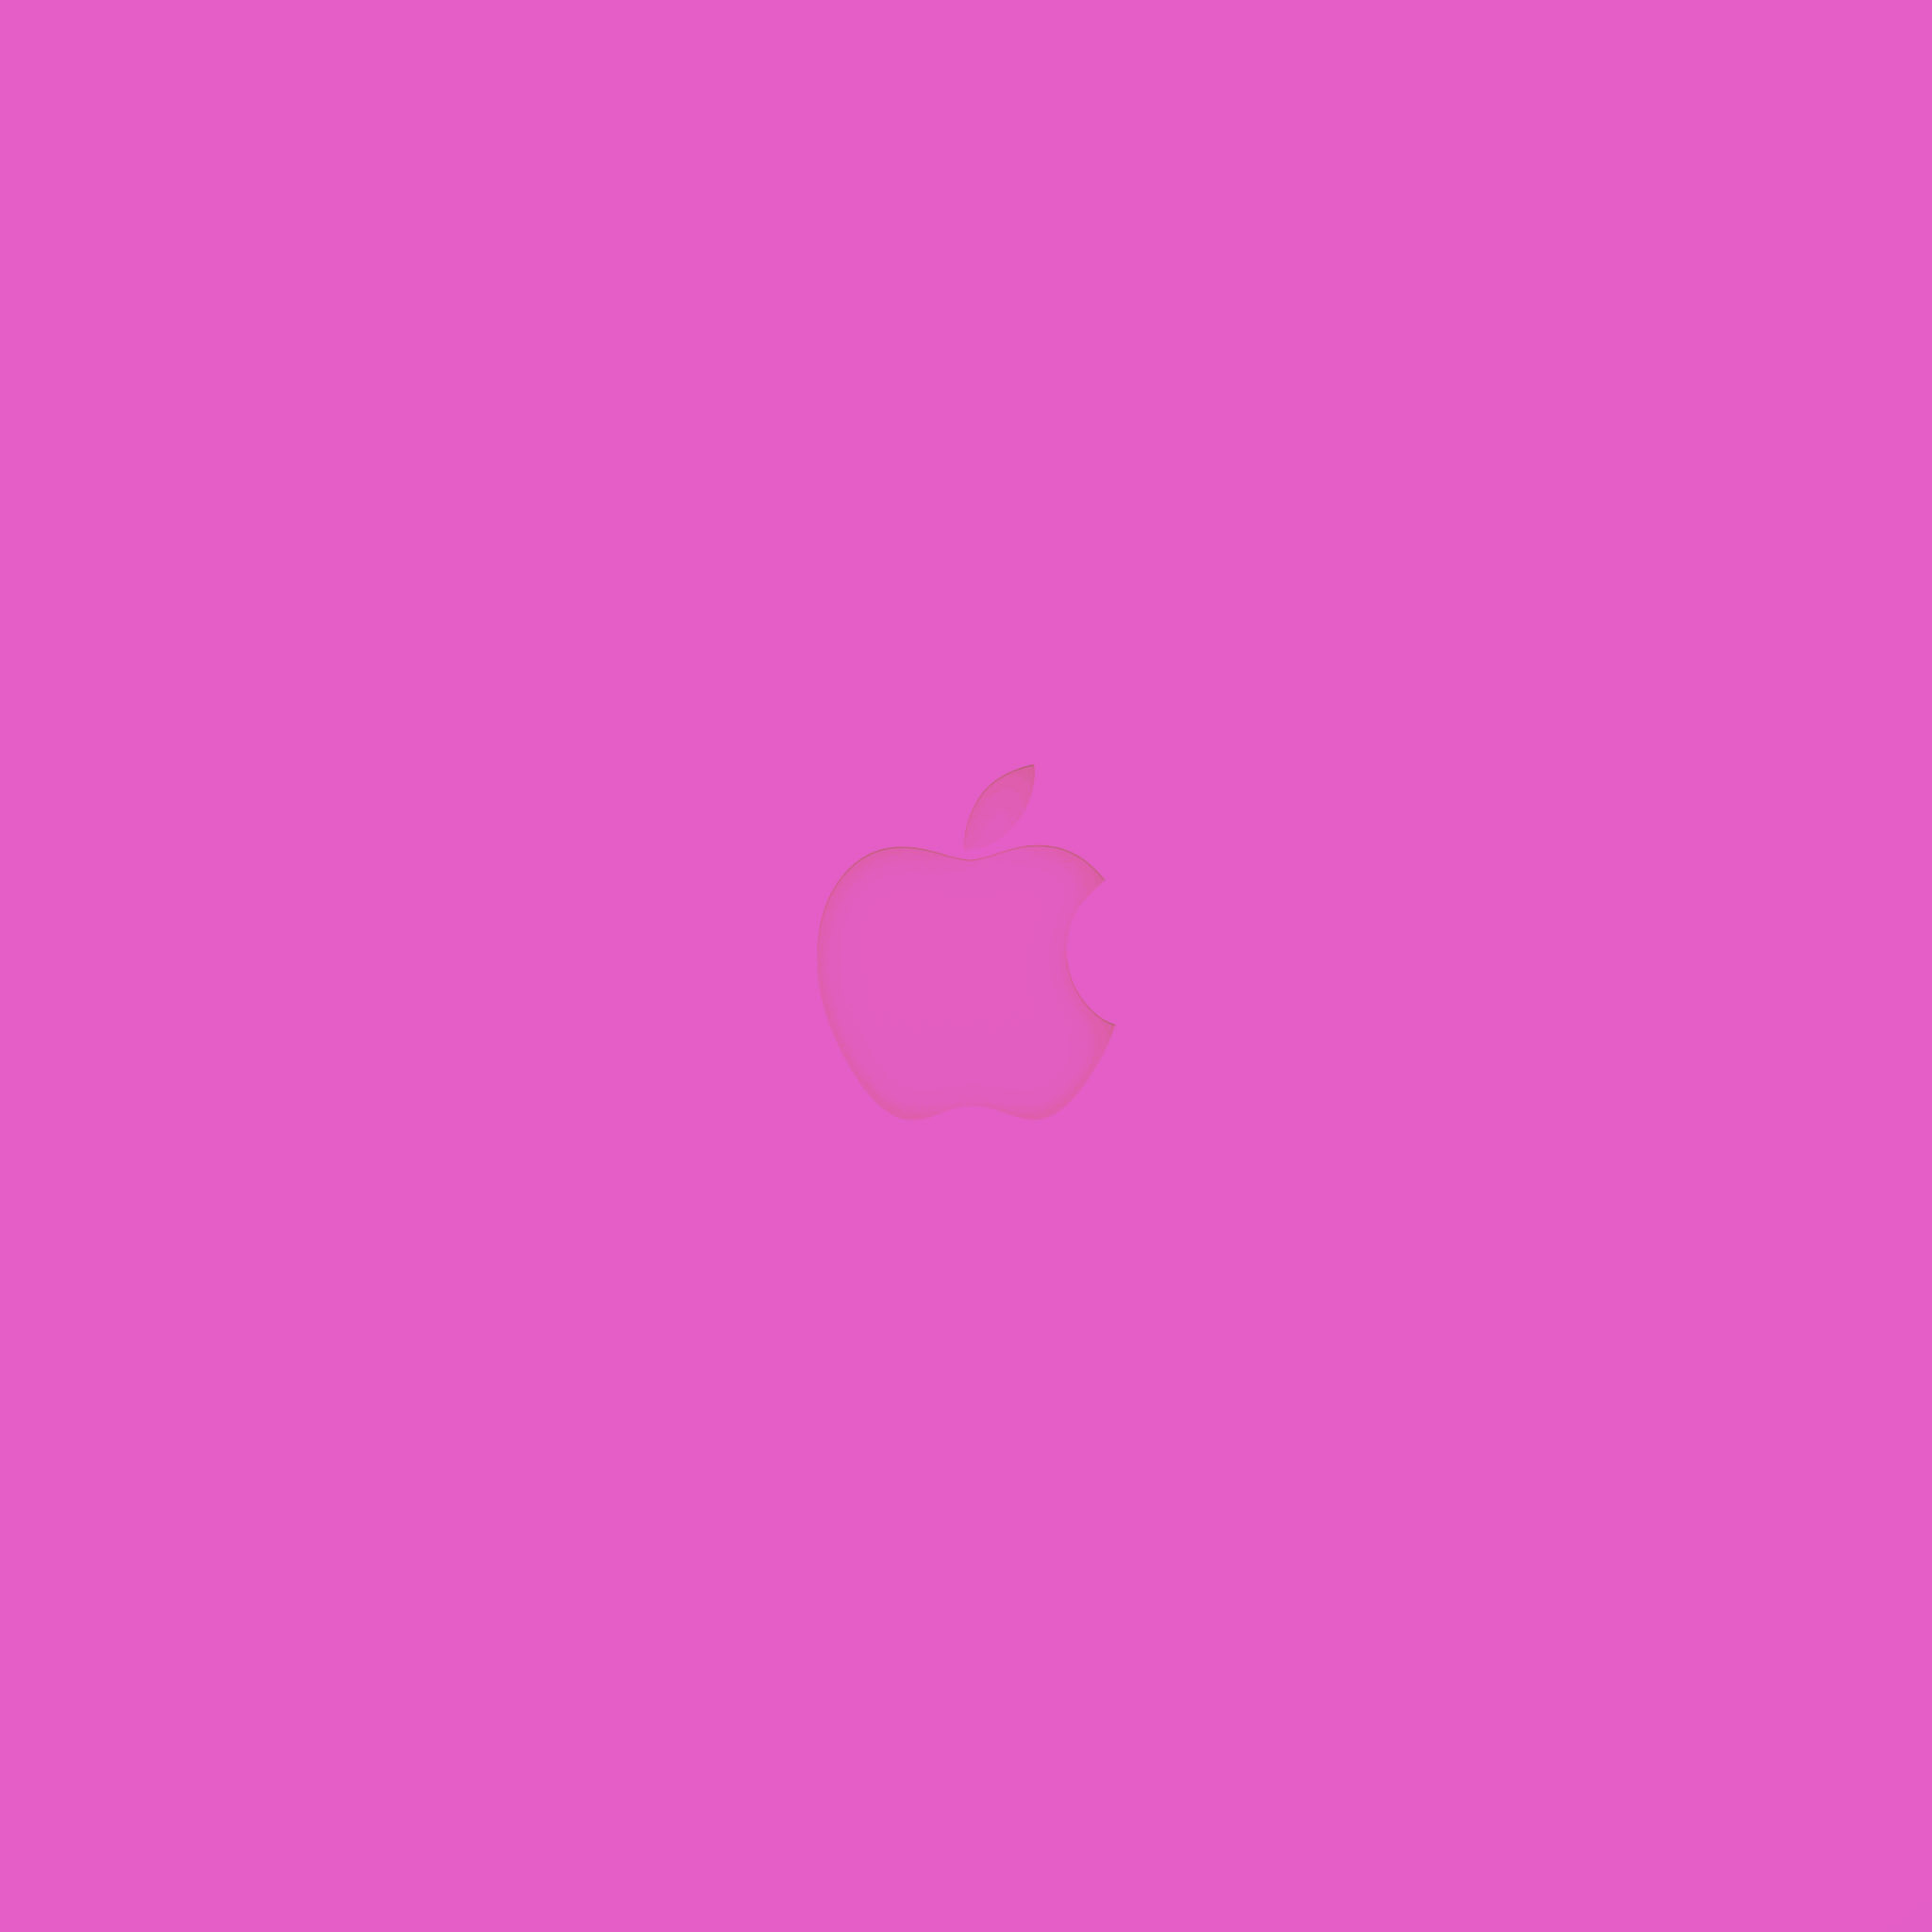 Ios7 Pink Apple Parallax HD iPhone iPad Wallpaper